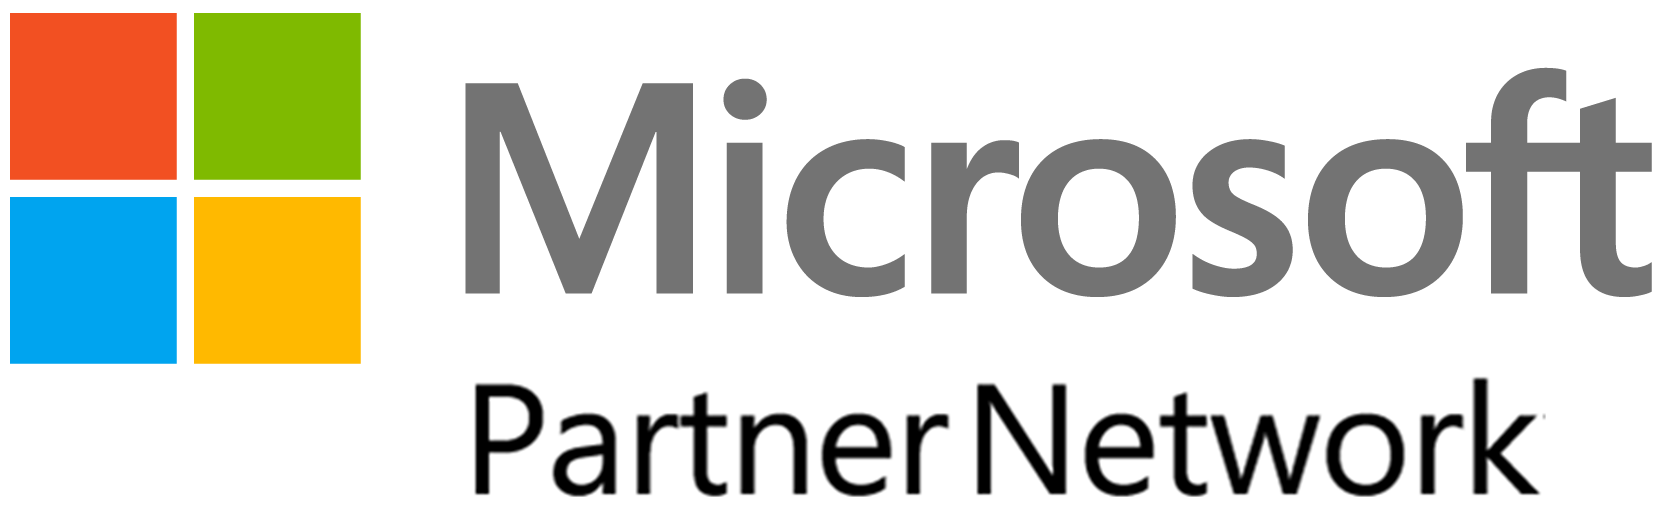 microsoft partner network logo png clip art